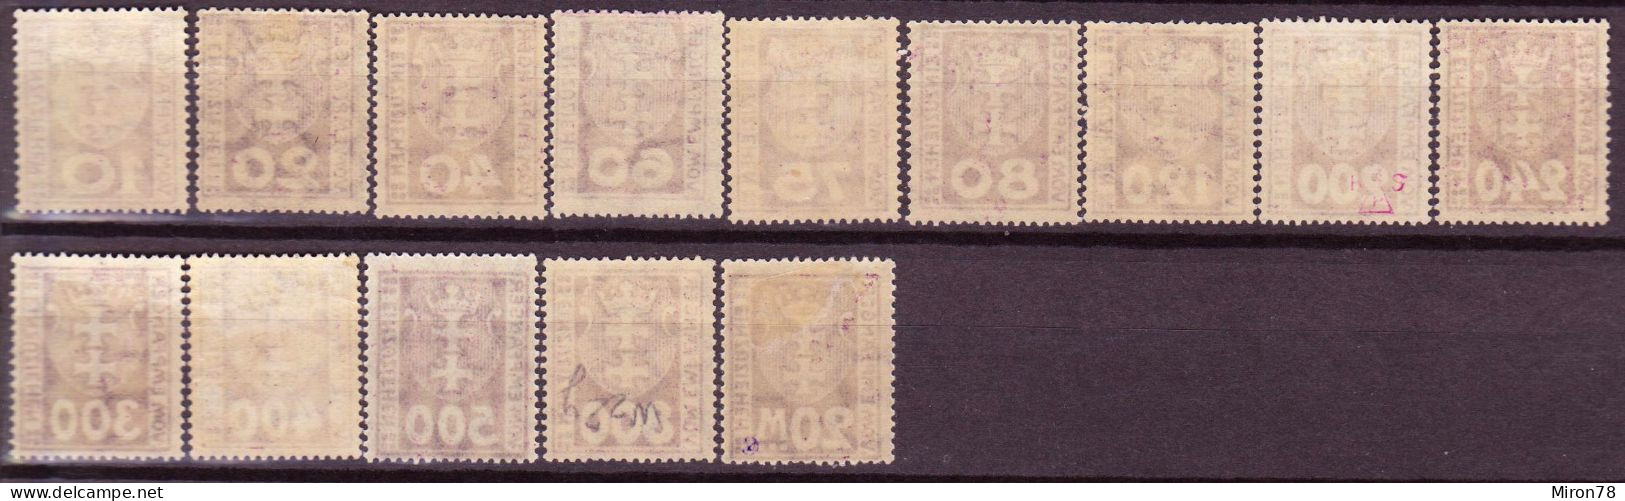 Stamps Danzig 1923 POSTAGE DUE STAMPS Mint MNH Lot6 - Portomarken